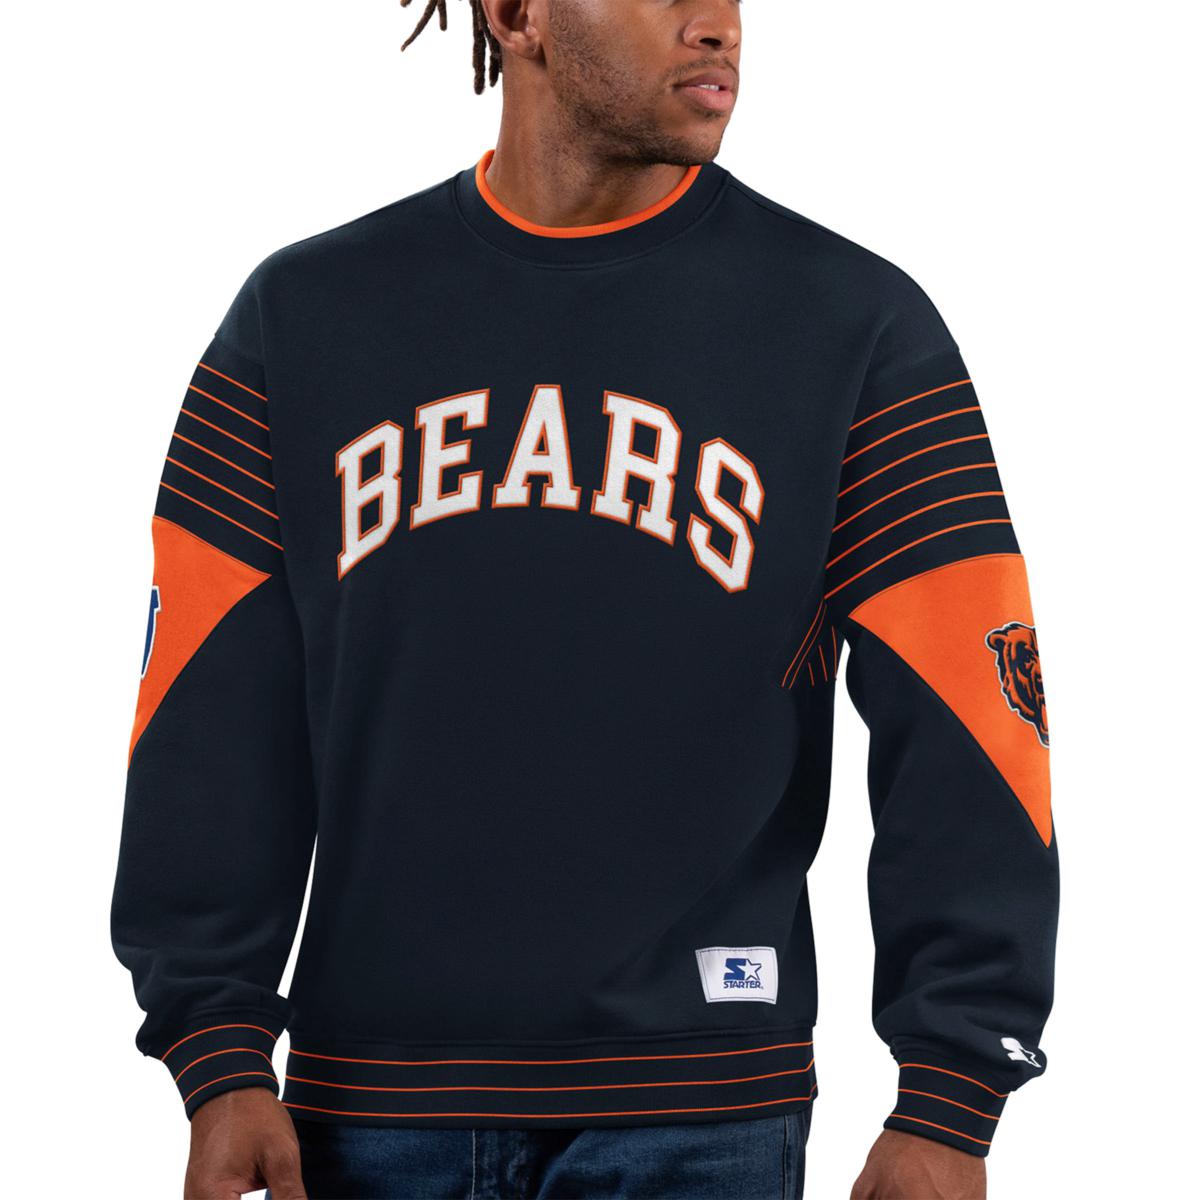 Football Fan Shop Officially Licensed NFL Crew-Neck Sweatshirt by Starter - Bears